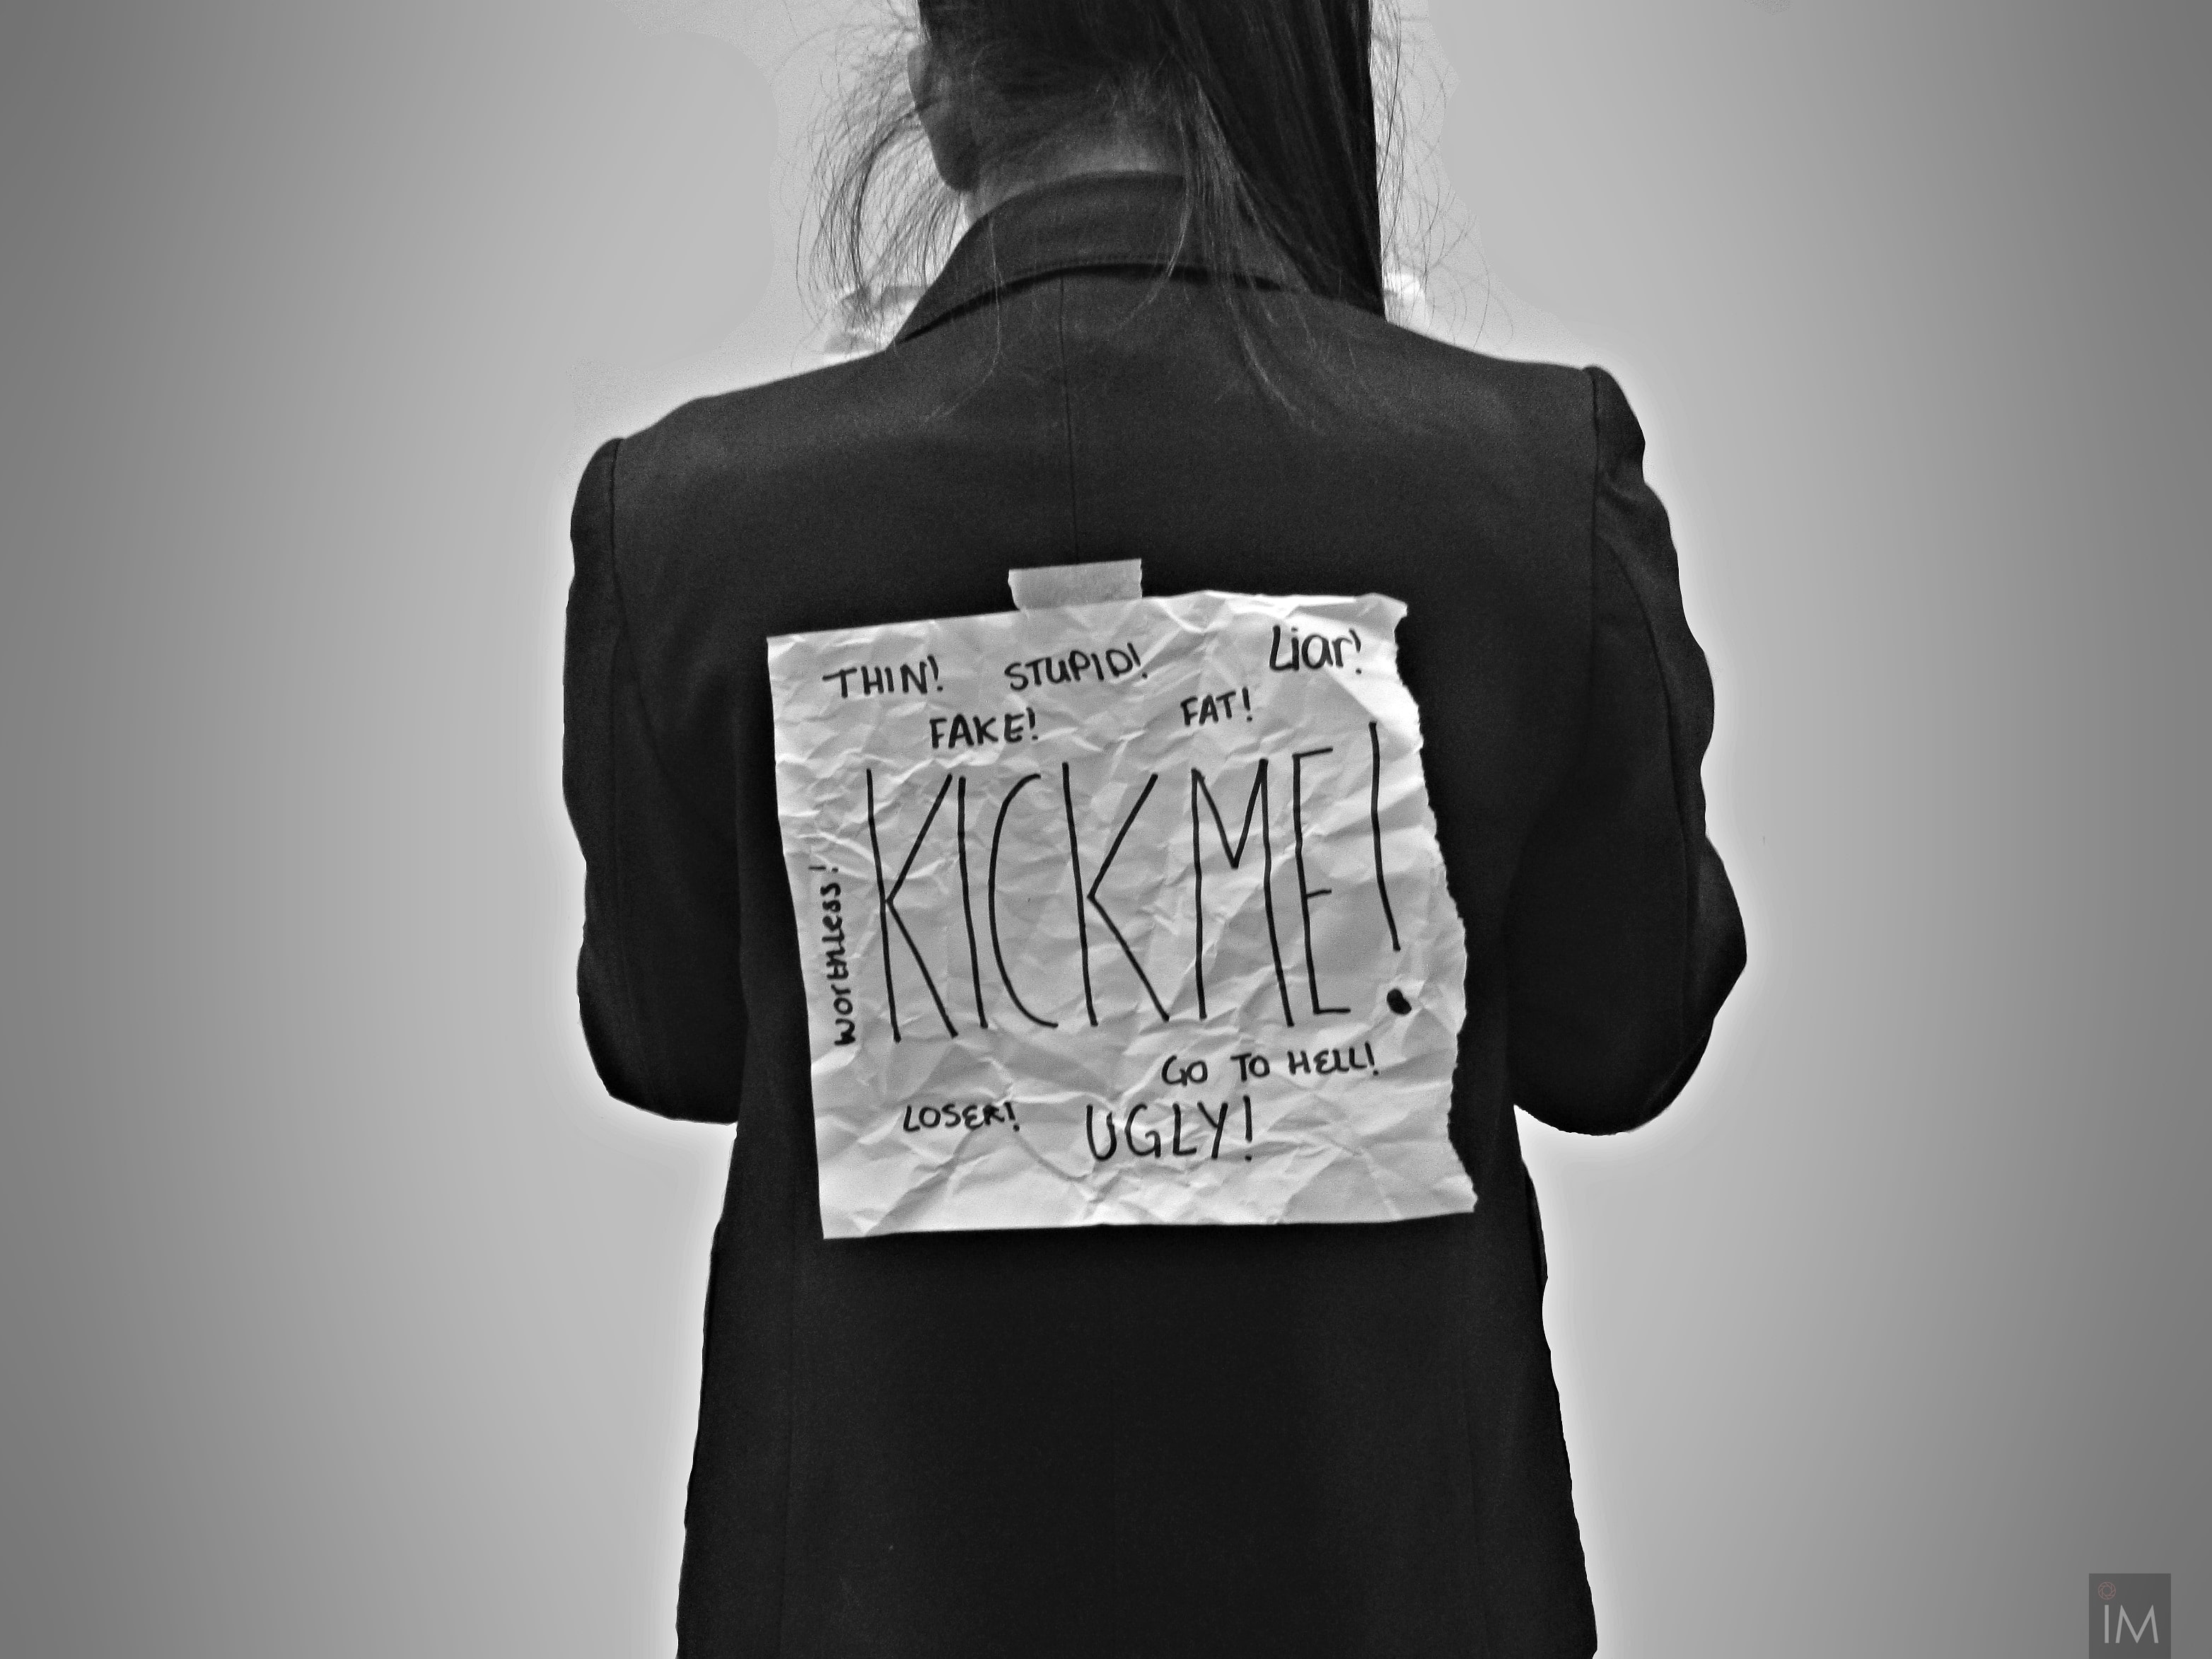 Woman with kick me sign on back; image by Ilayza Macayan, via Unsplash.com.